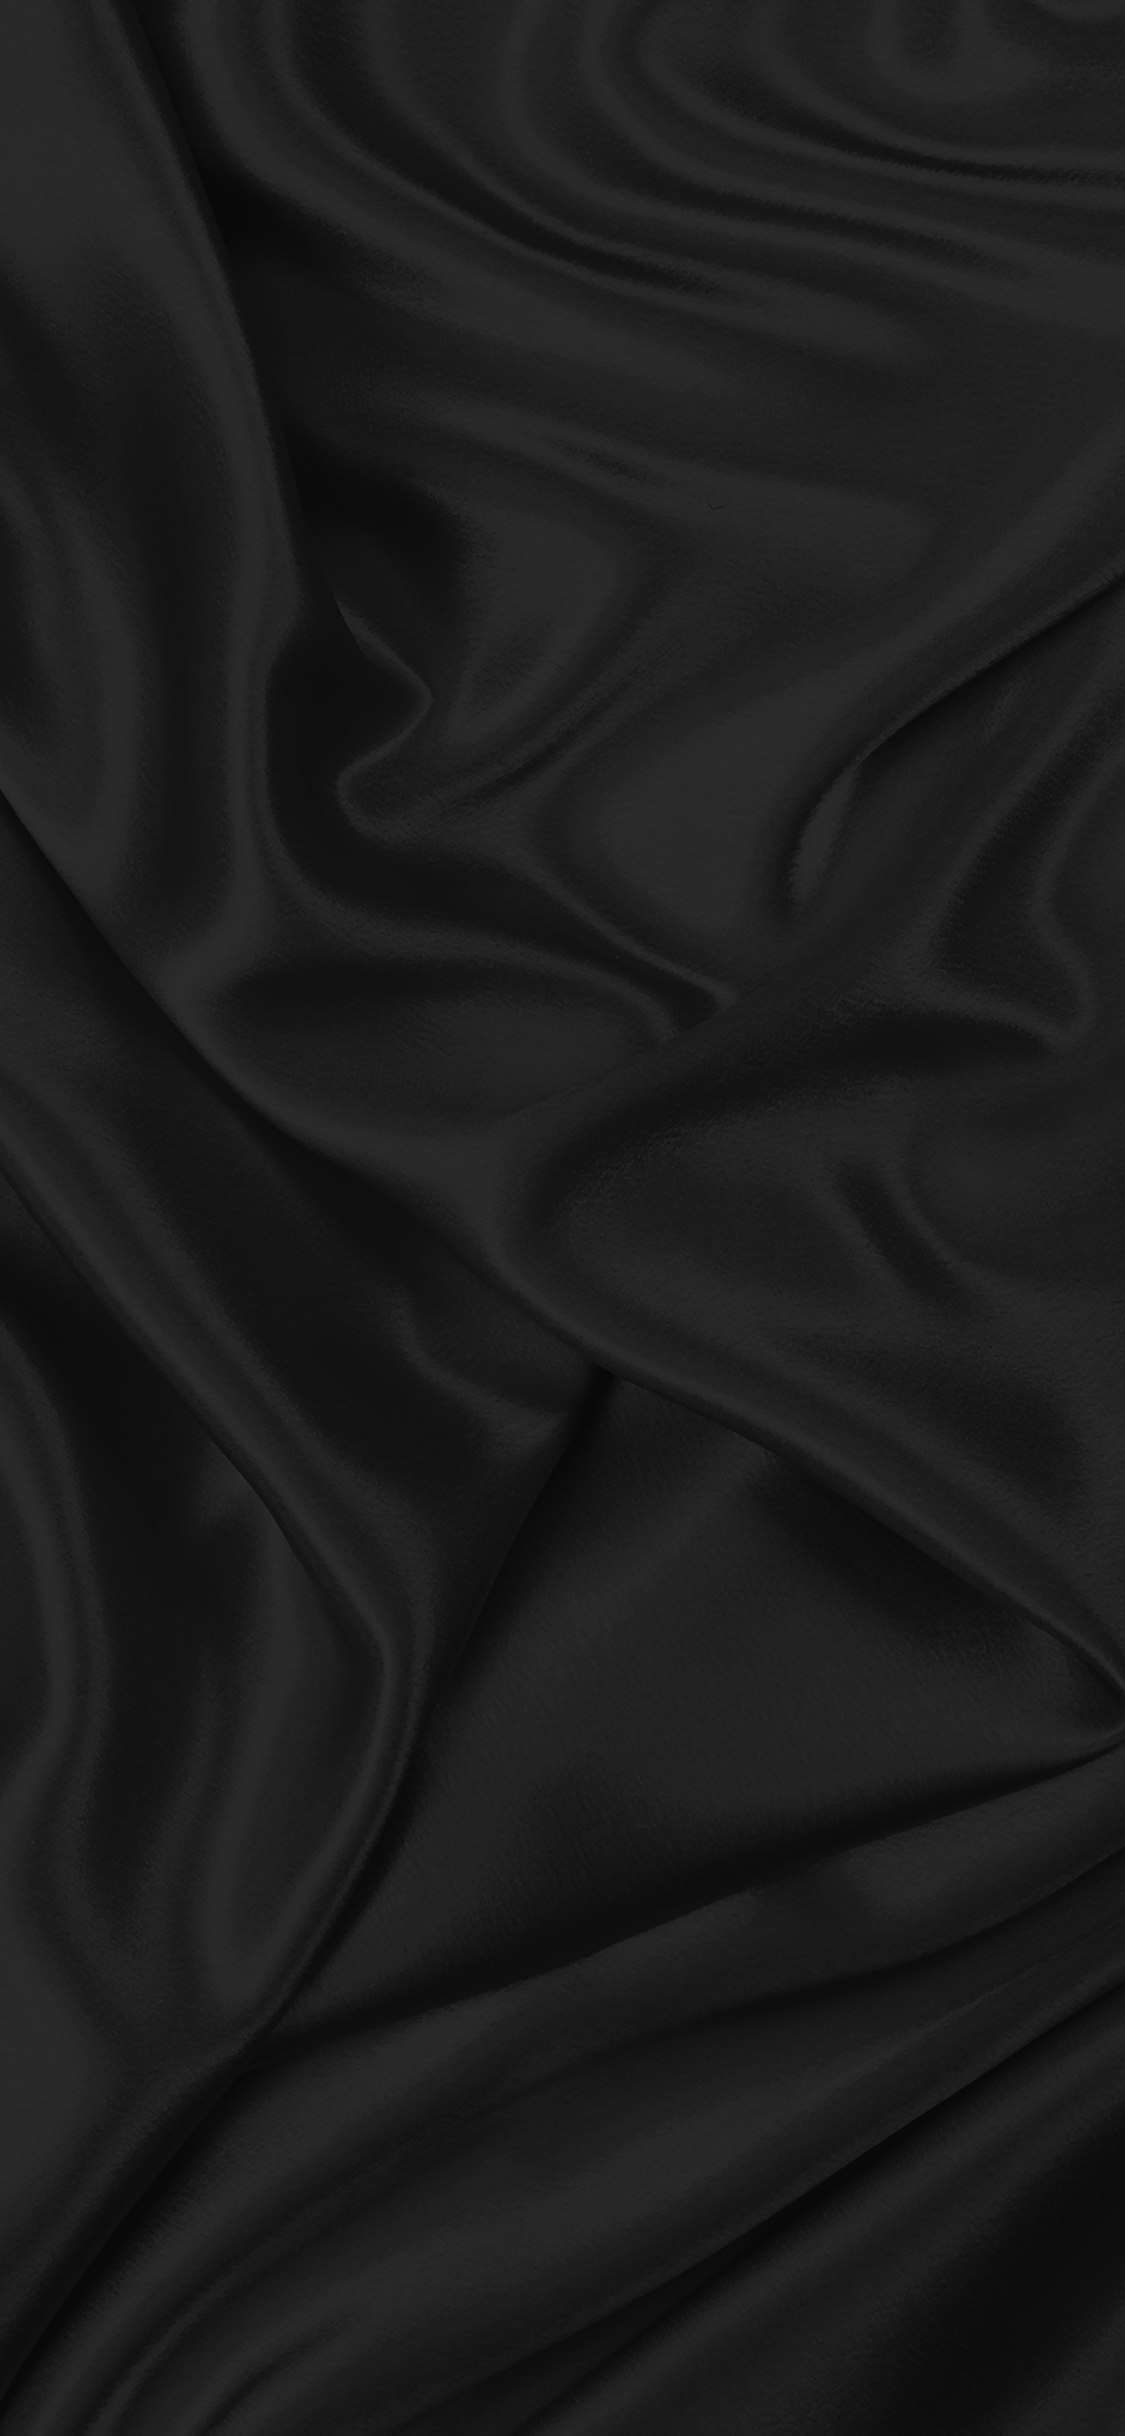 iPhone X wallpaper. fabric texture dark bw pattern